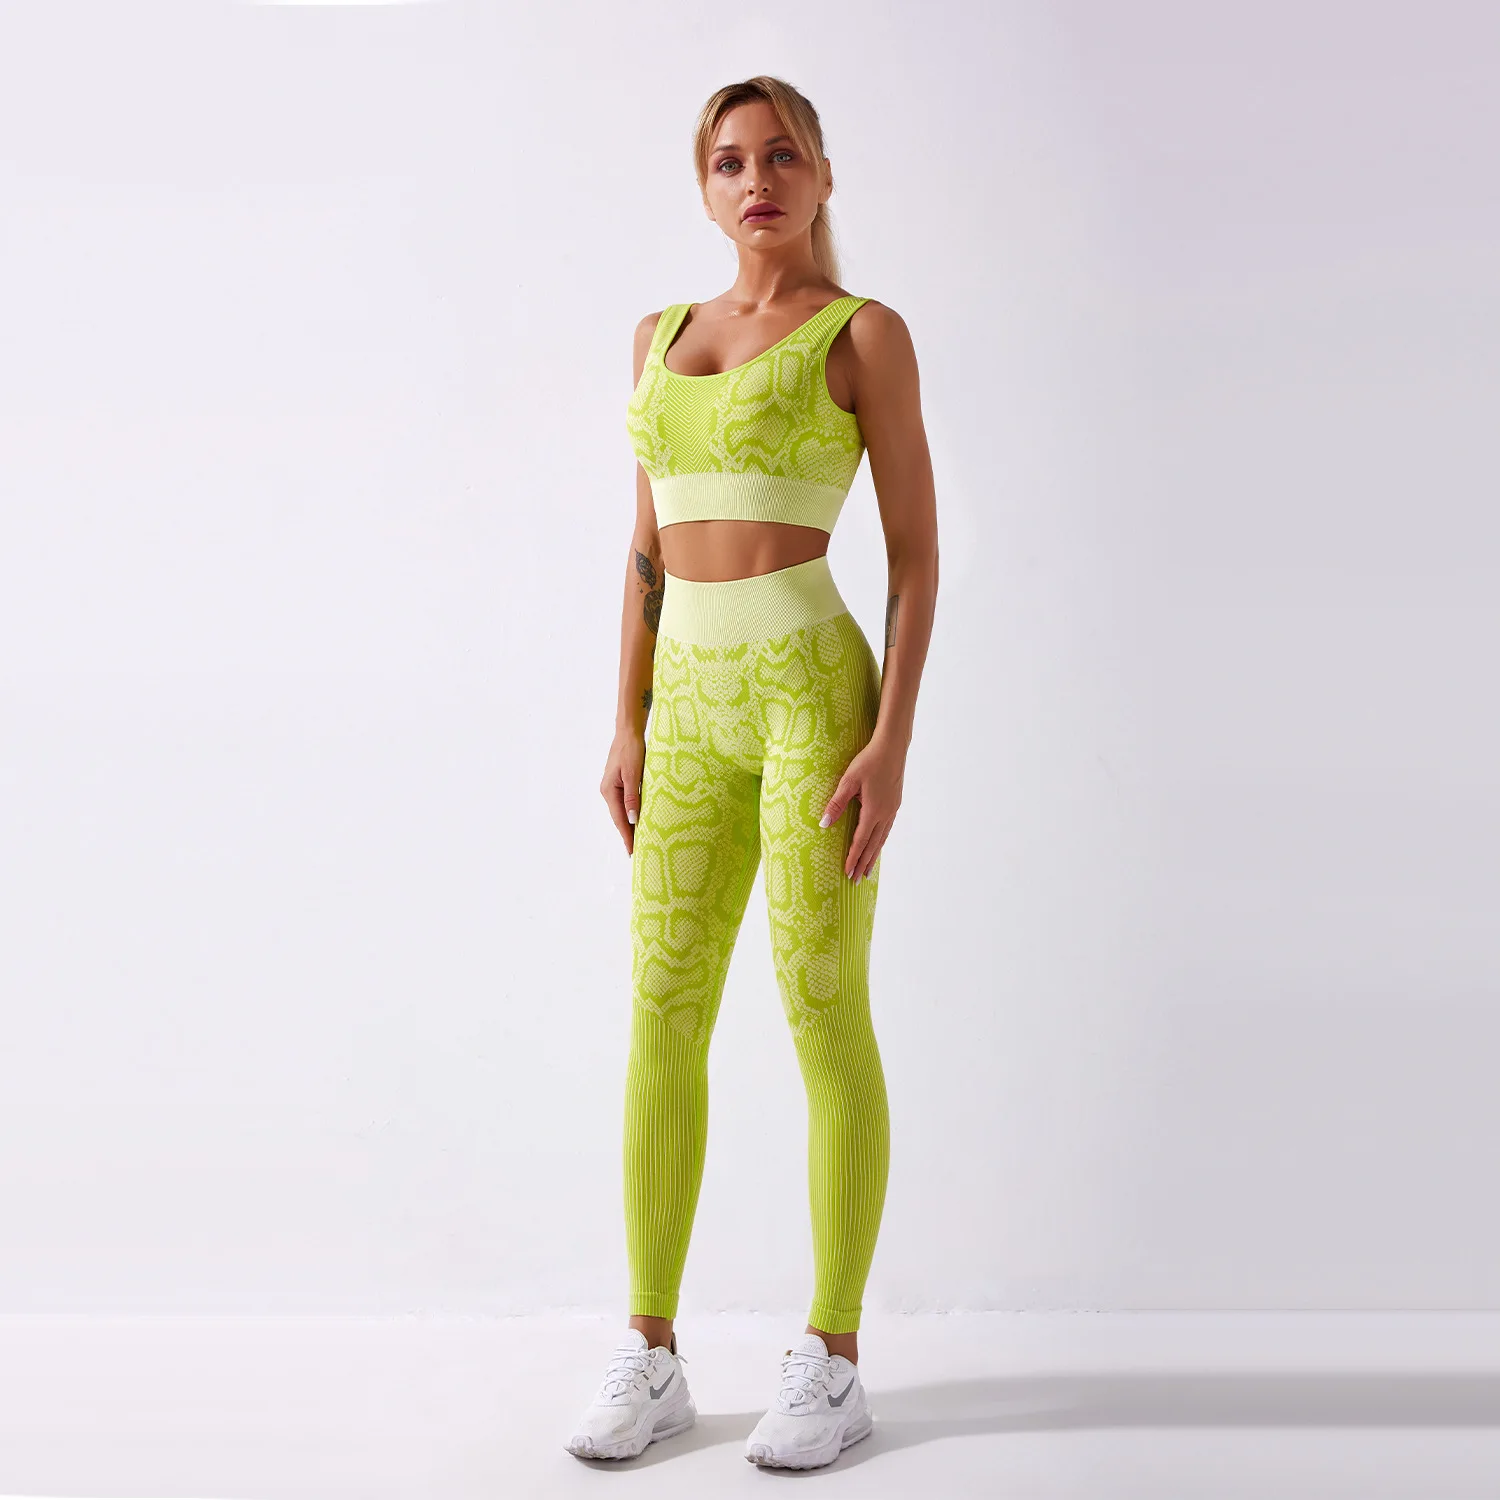 

Snakeskin Print Seamless Yoga Set Fashion Women Fitness Casual Clothe Long Pants+Sport Bra Elastic Tracksuits 2 PCS Summer 2021